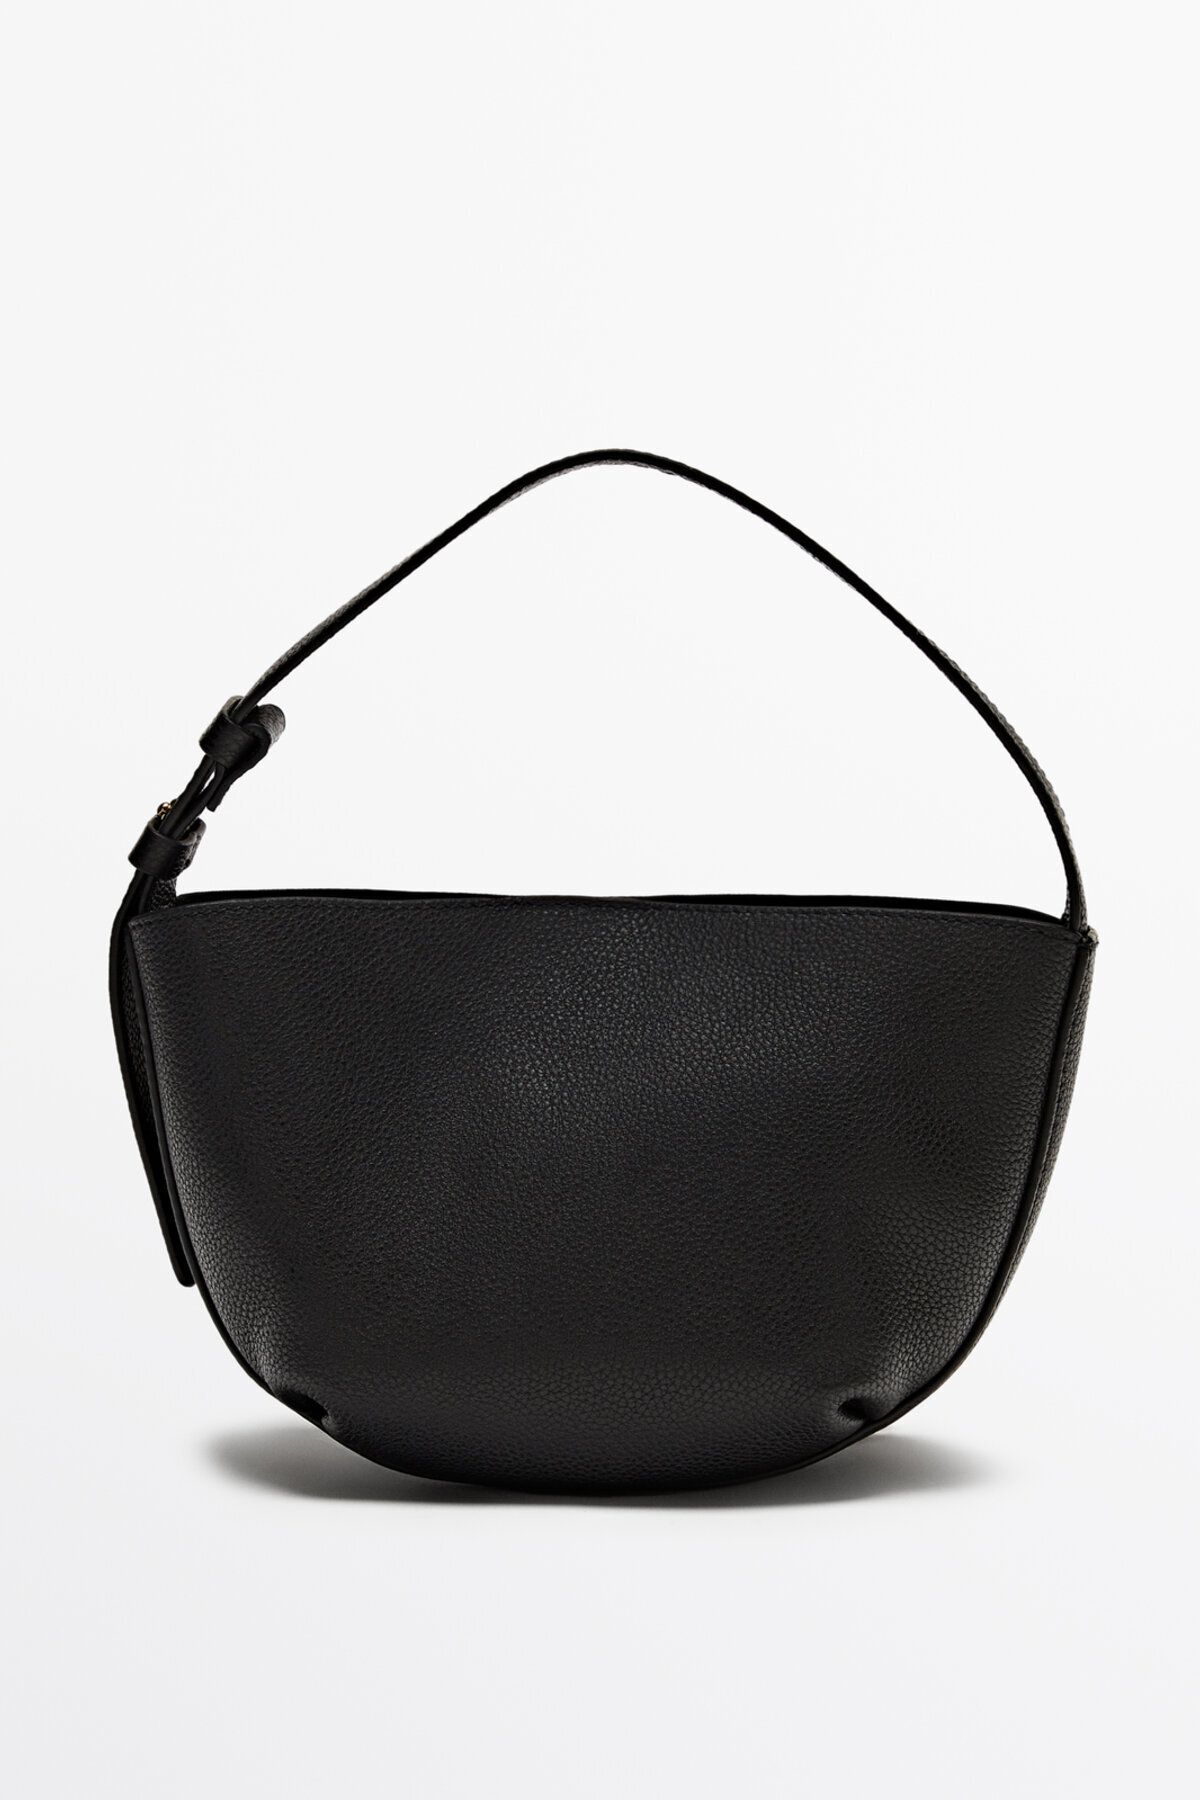 Massimo Dutti Mini eskitme Nappa deri çapraz askılı çanta